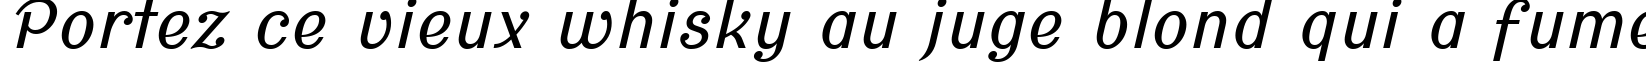 Пример написания шрифтом Cursive Sans текста на французском